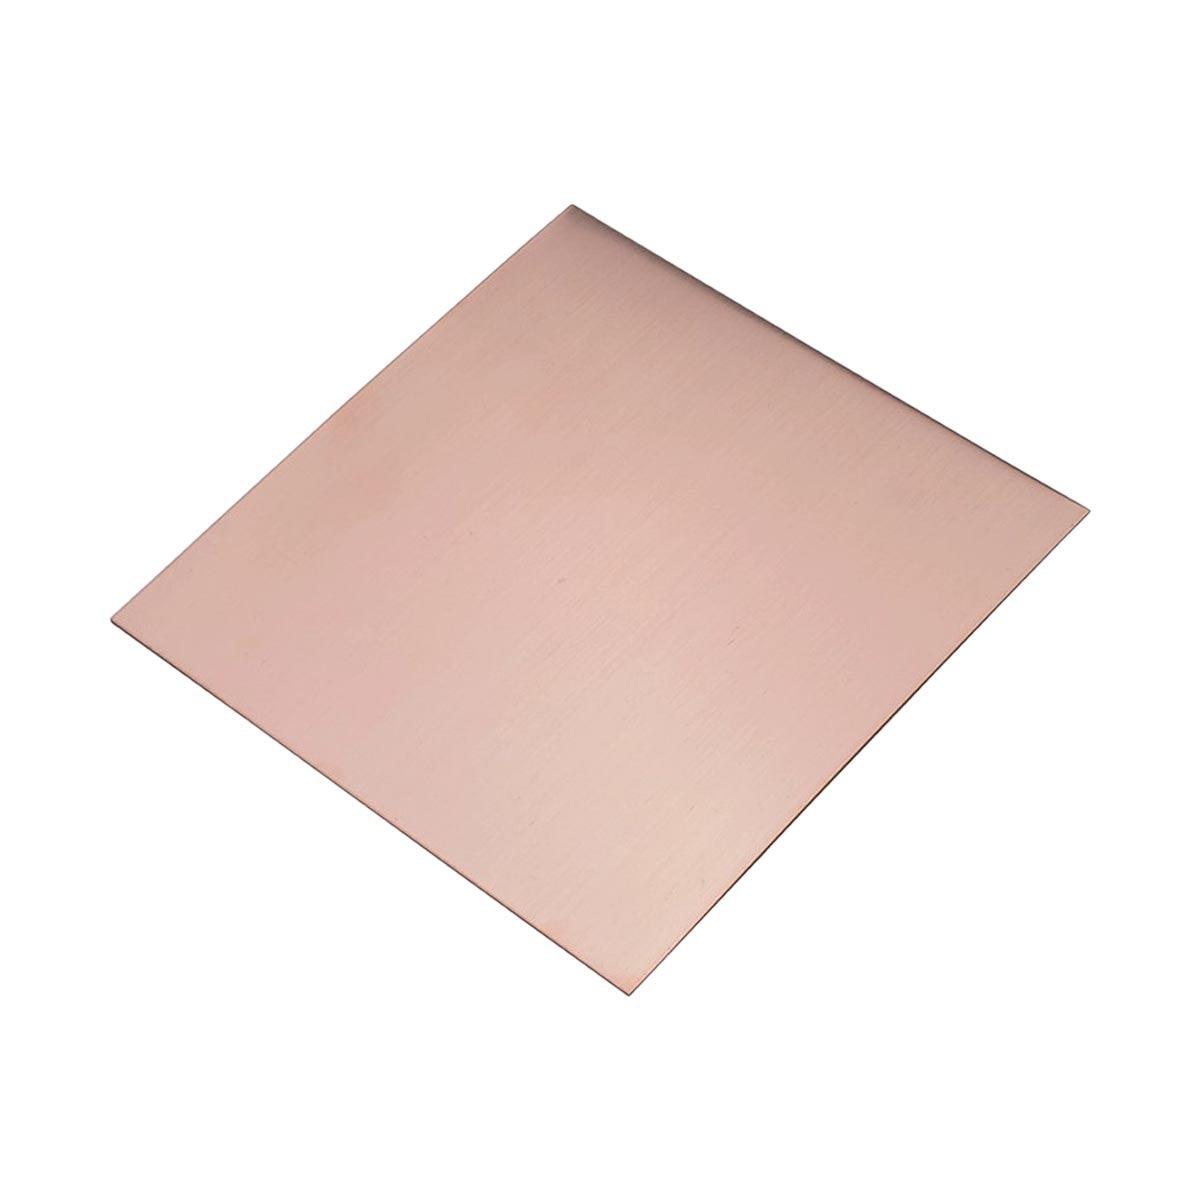 TRUE VALUE COMPANY (ORDERS) Copper Sheet Metal, .025 x 4 x 10-In.